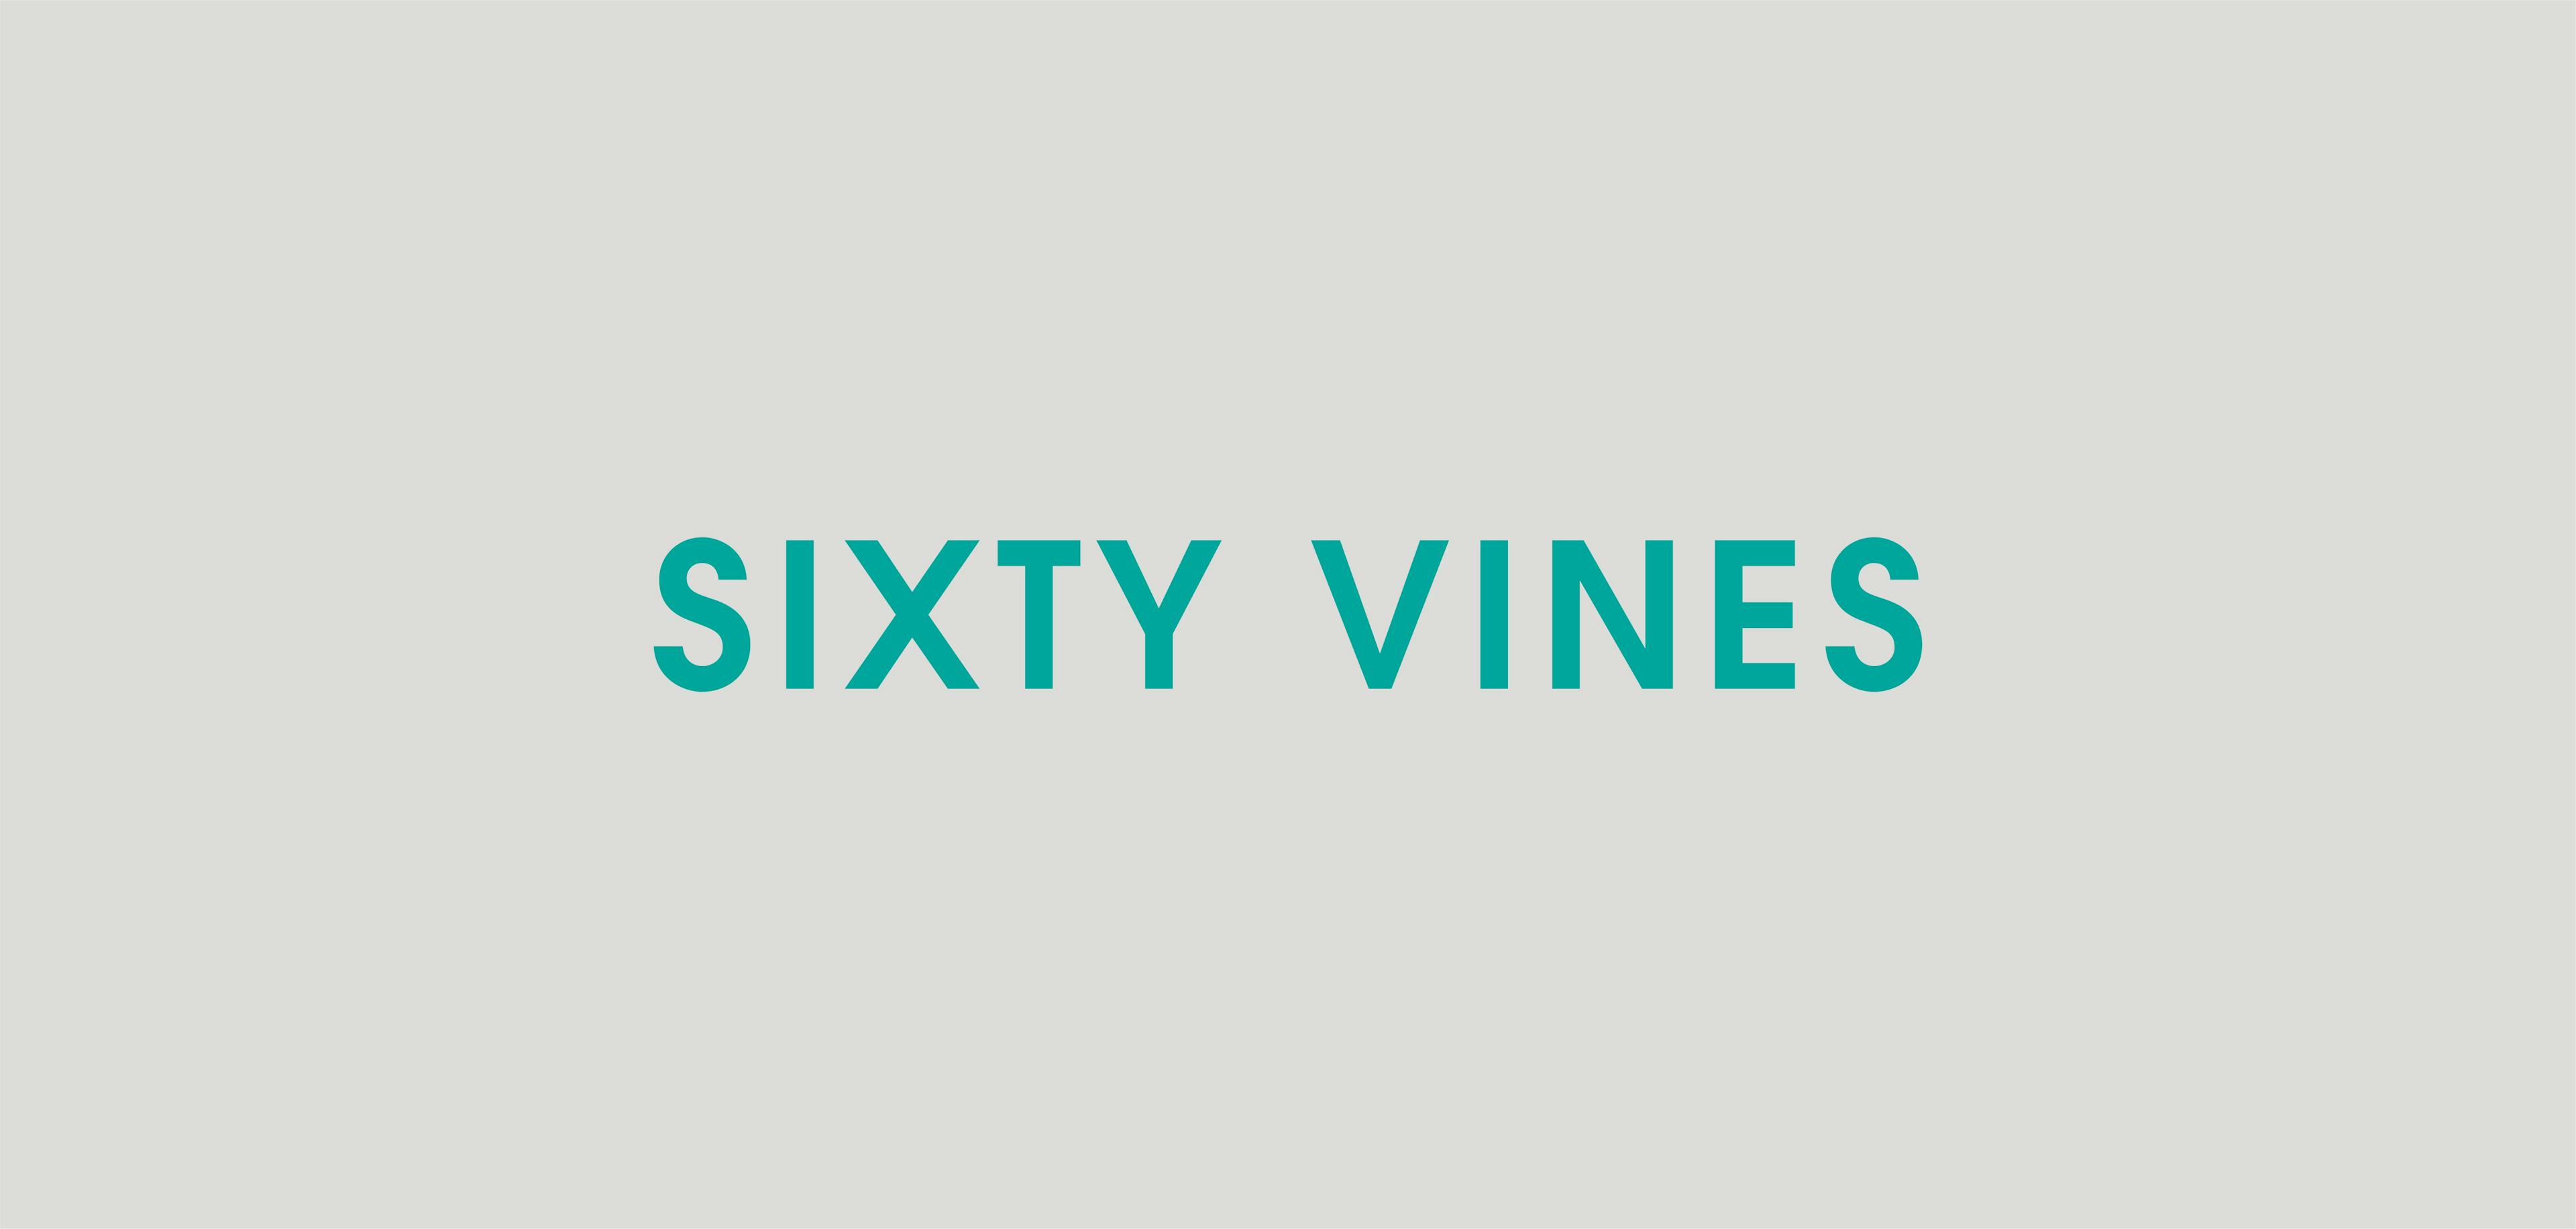 Sixty Vines signage